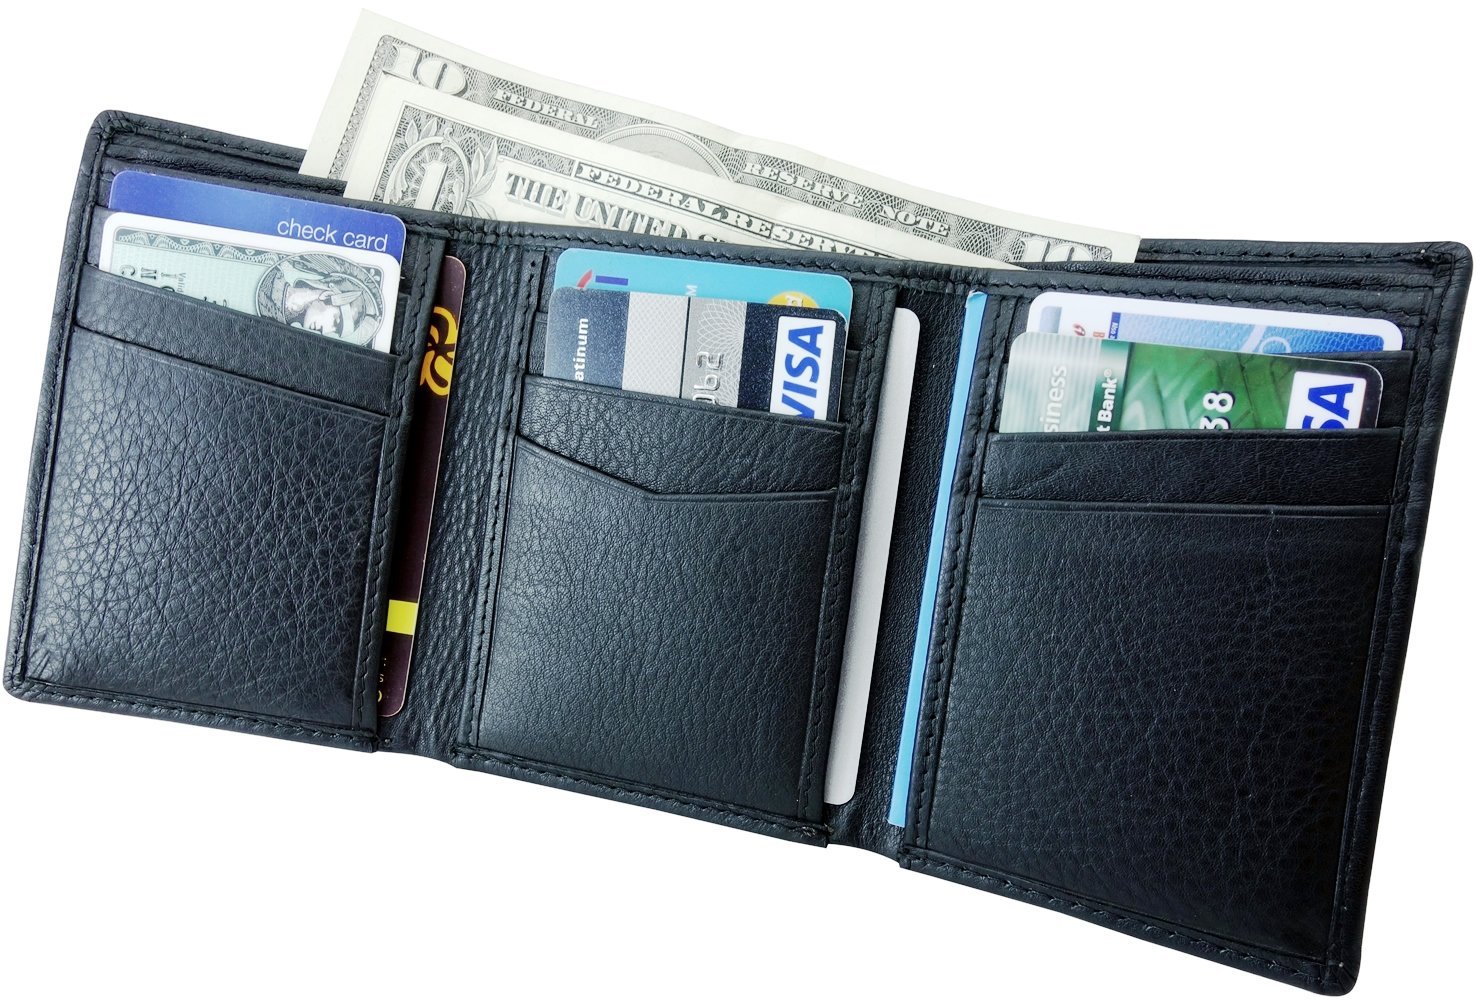 Tri Fold Leather Wallet